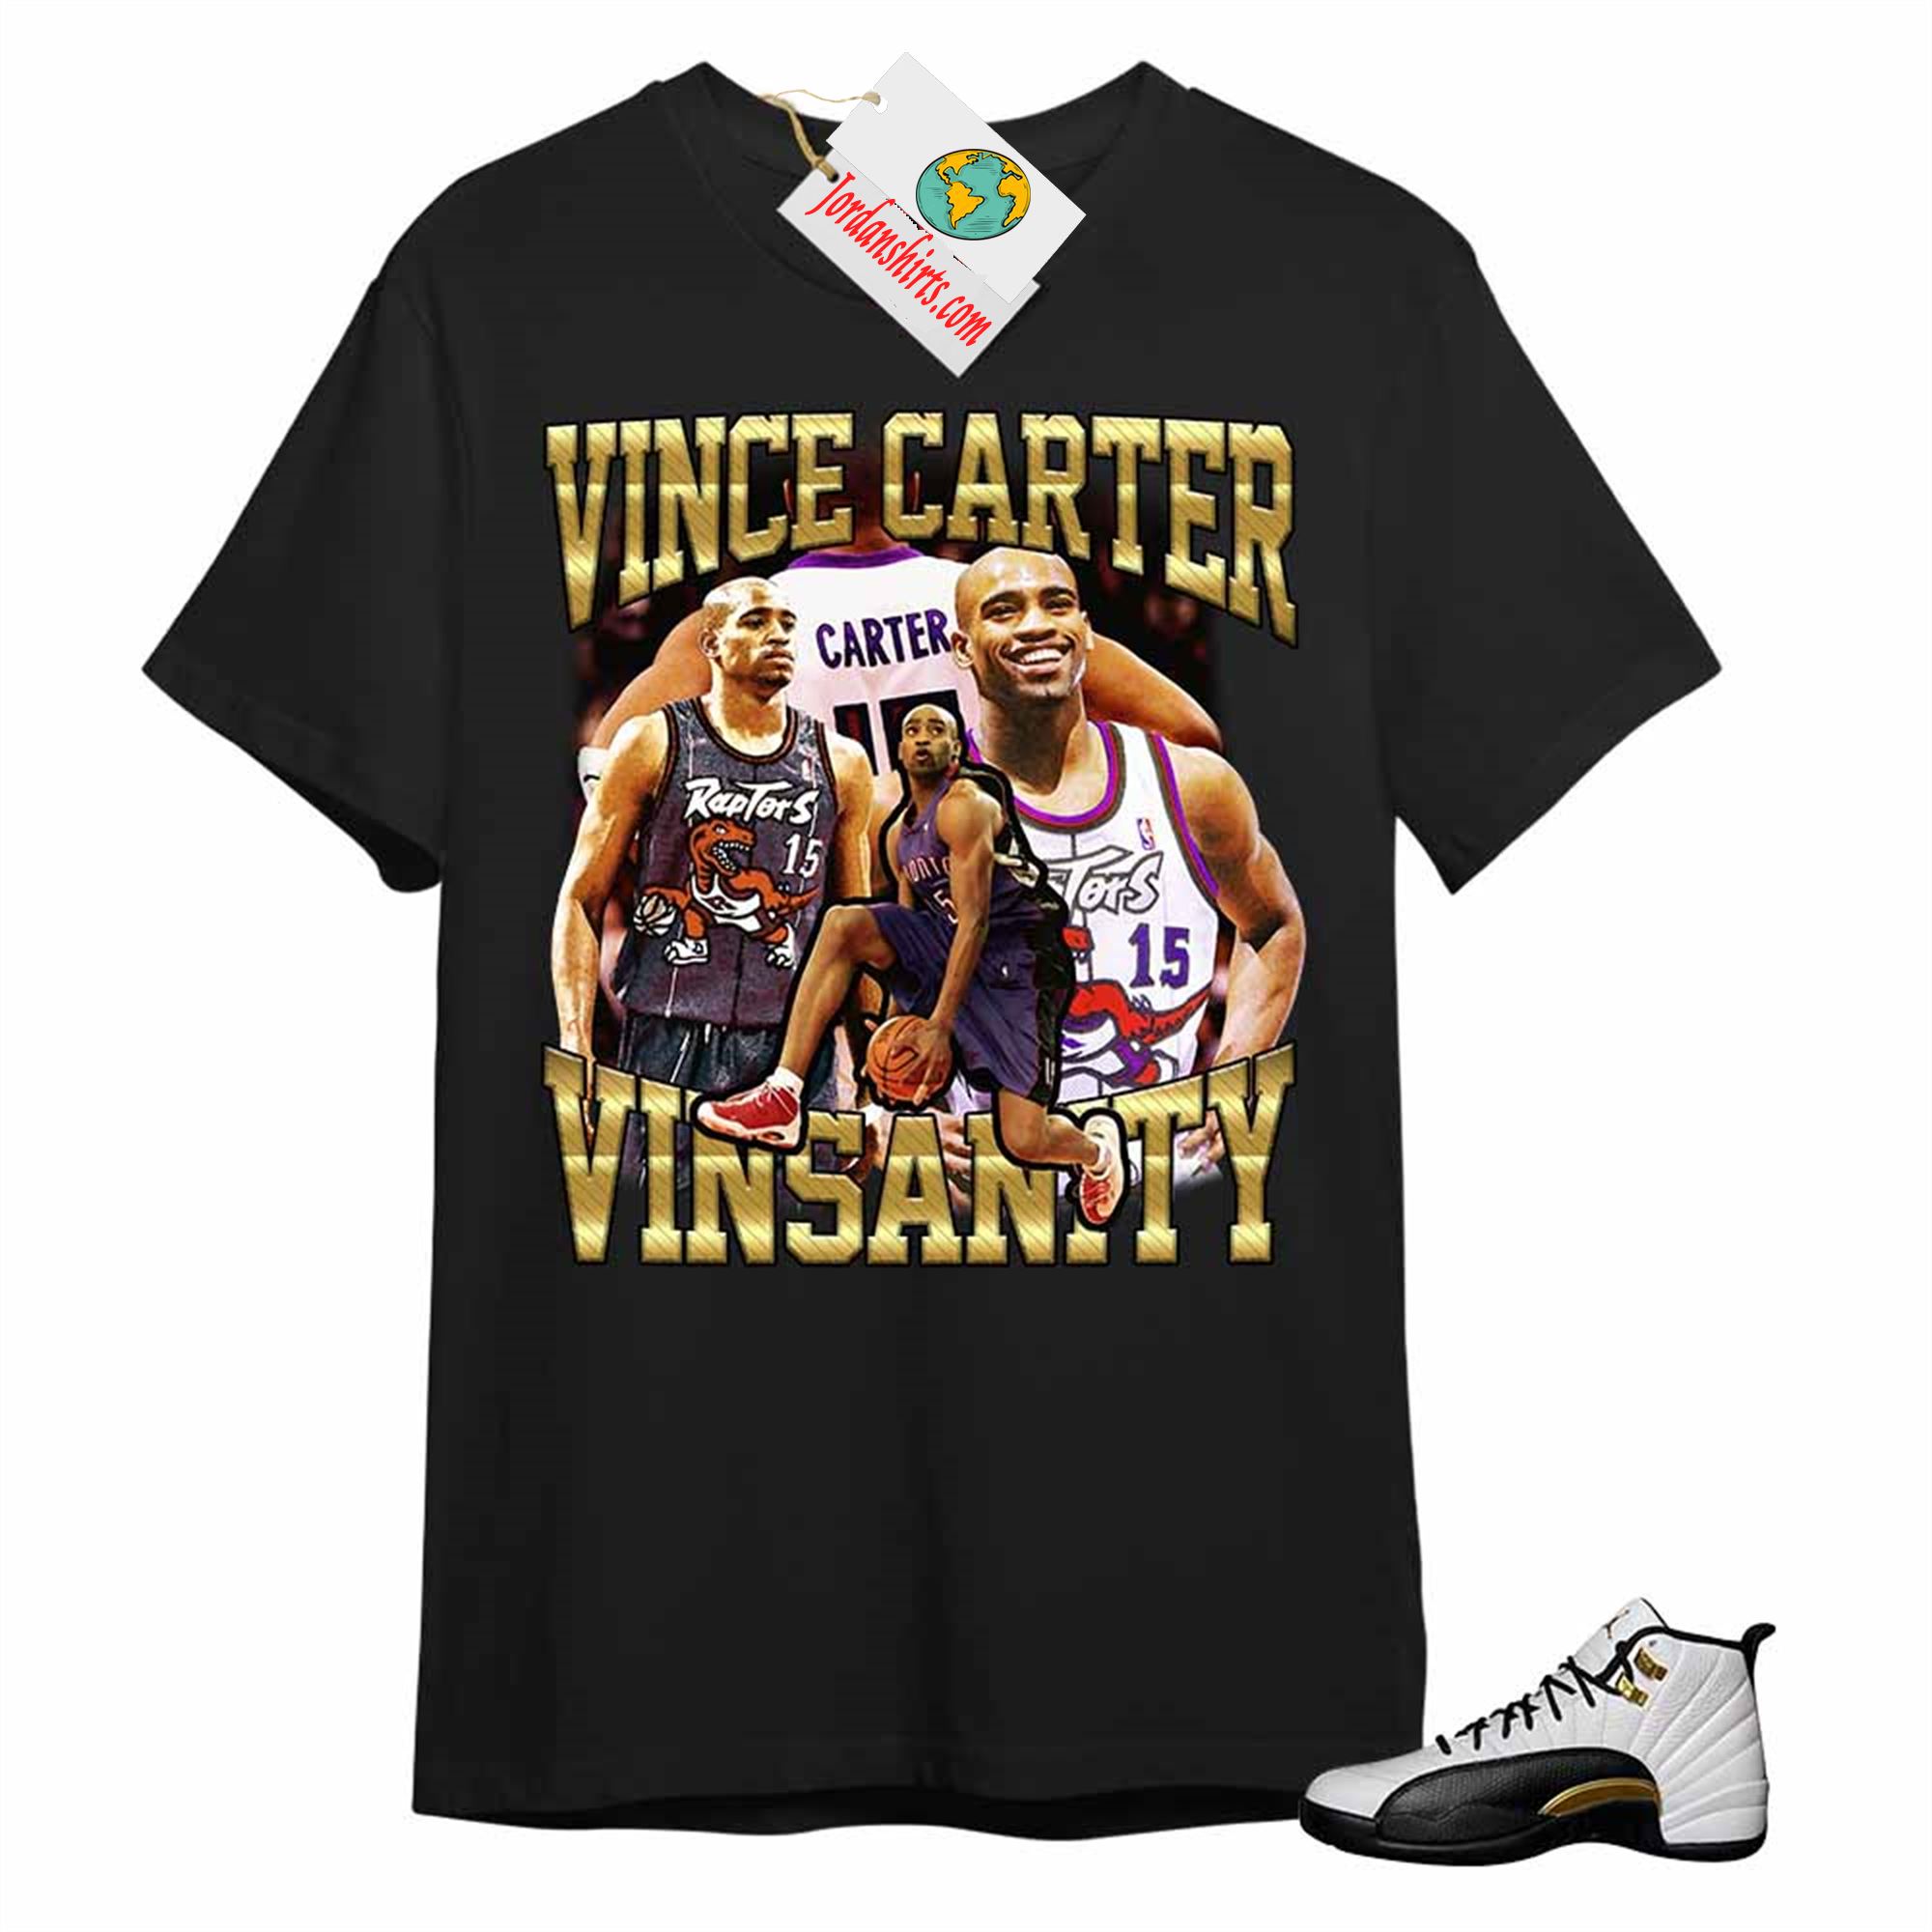 Jordan 12 Shirt, Vince Carter Vinsanity Basketball 90s Retro Vintage Black T-shirt Air Jordan 12 Royalty 12s Full Size Up To 5xl